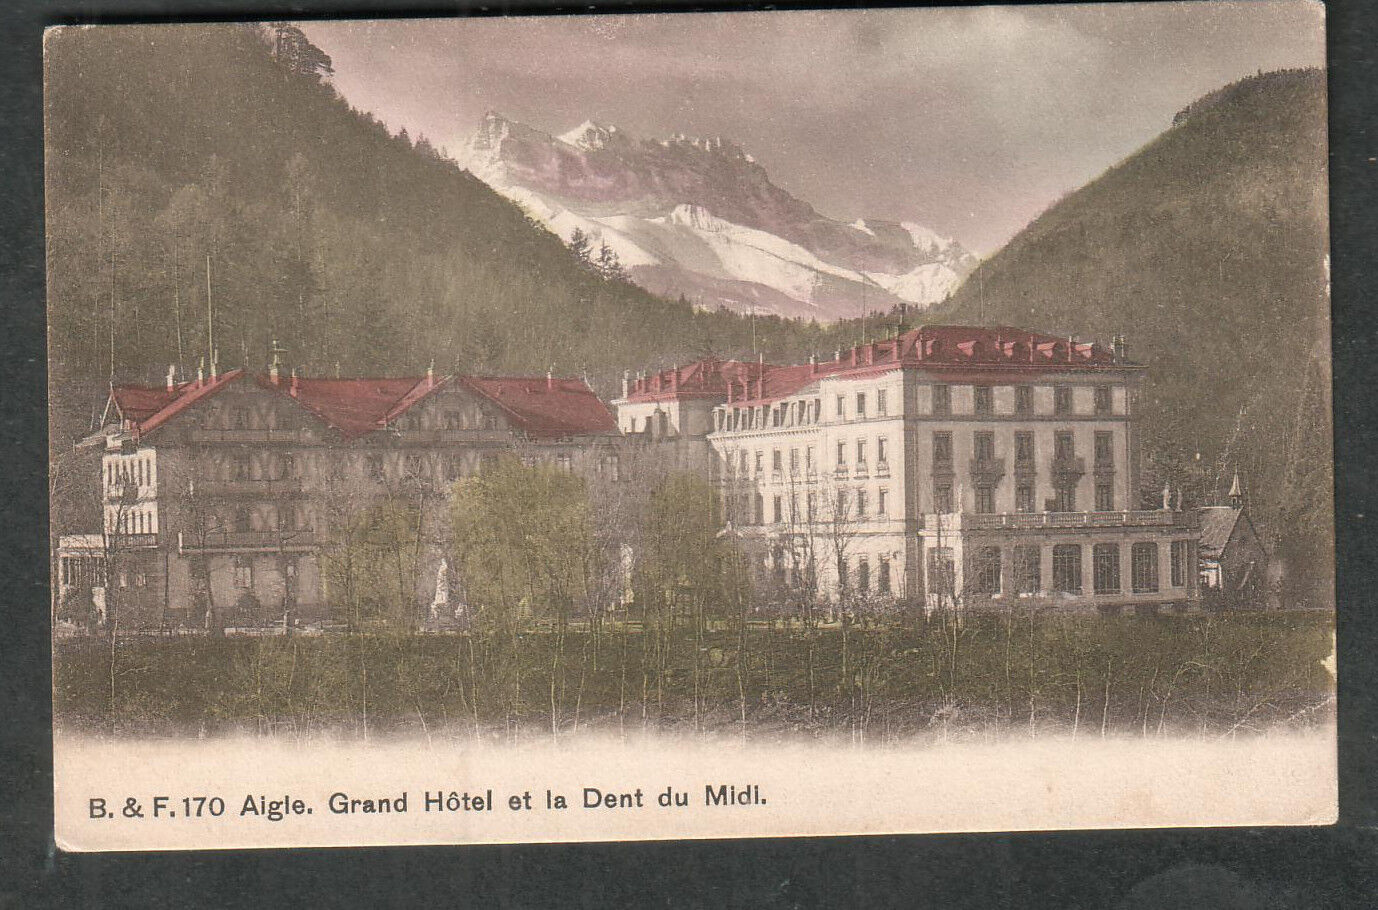 Switzerland unmailed B&F 170 Aigle Grand Hotel et la Dent du Midi post card